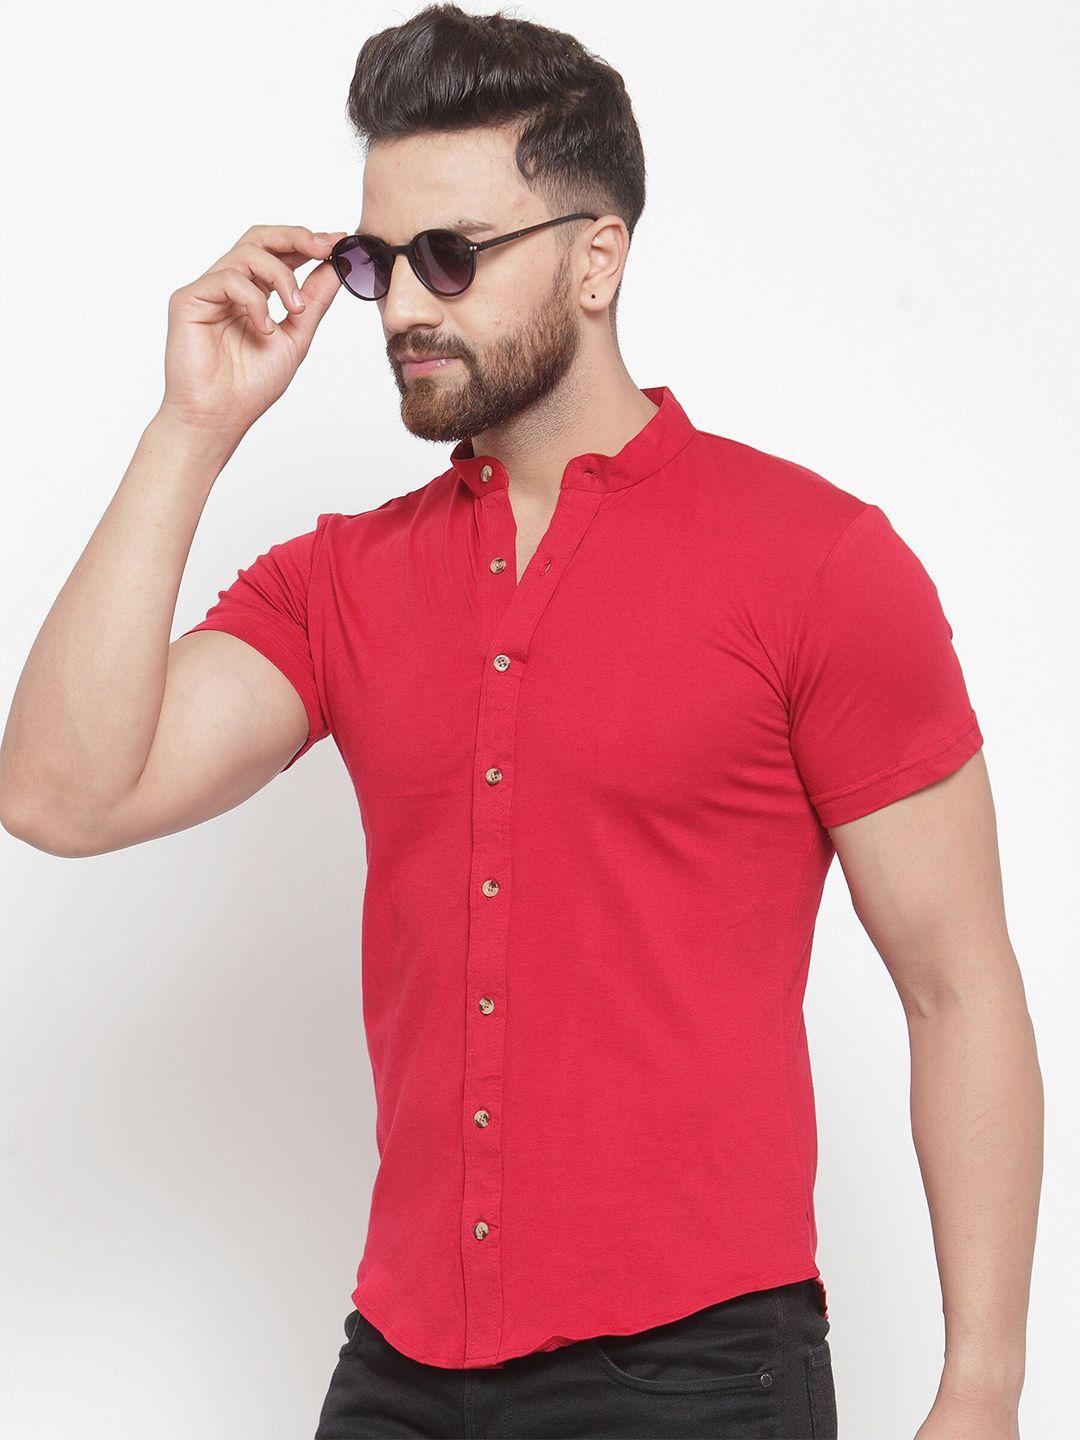 gespo men red casual cotton shirt